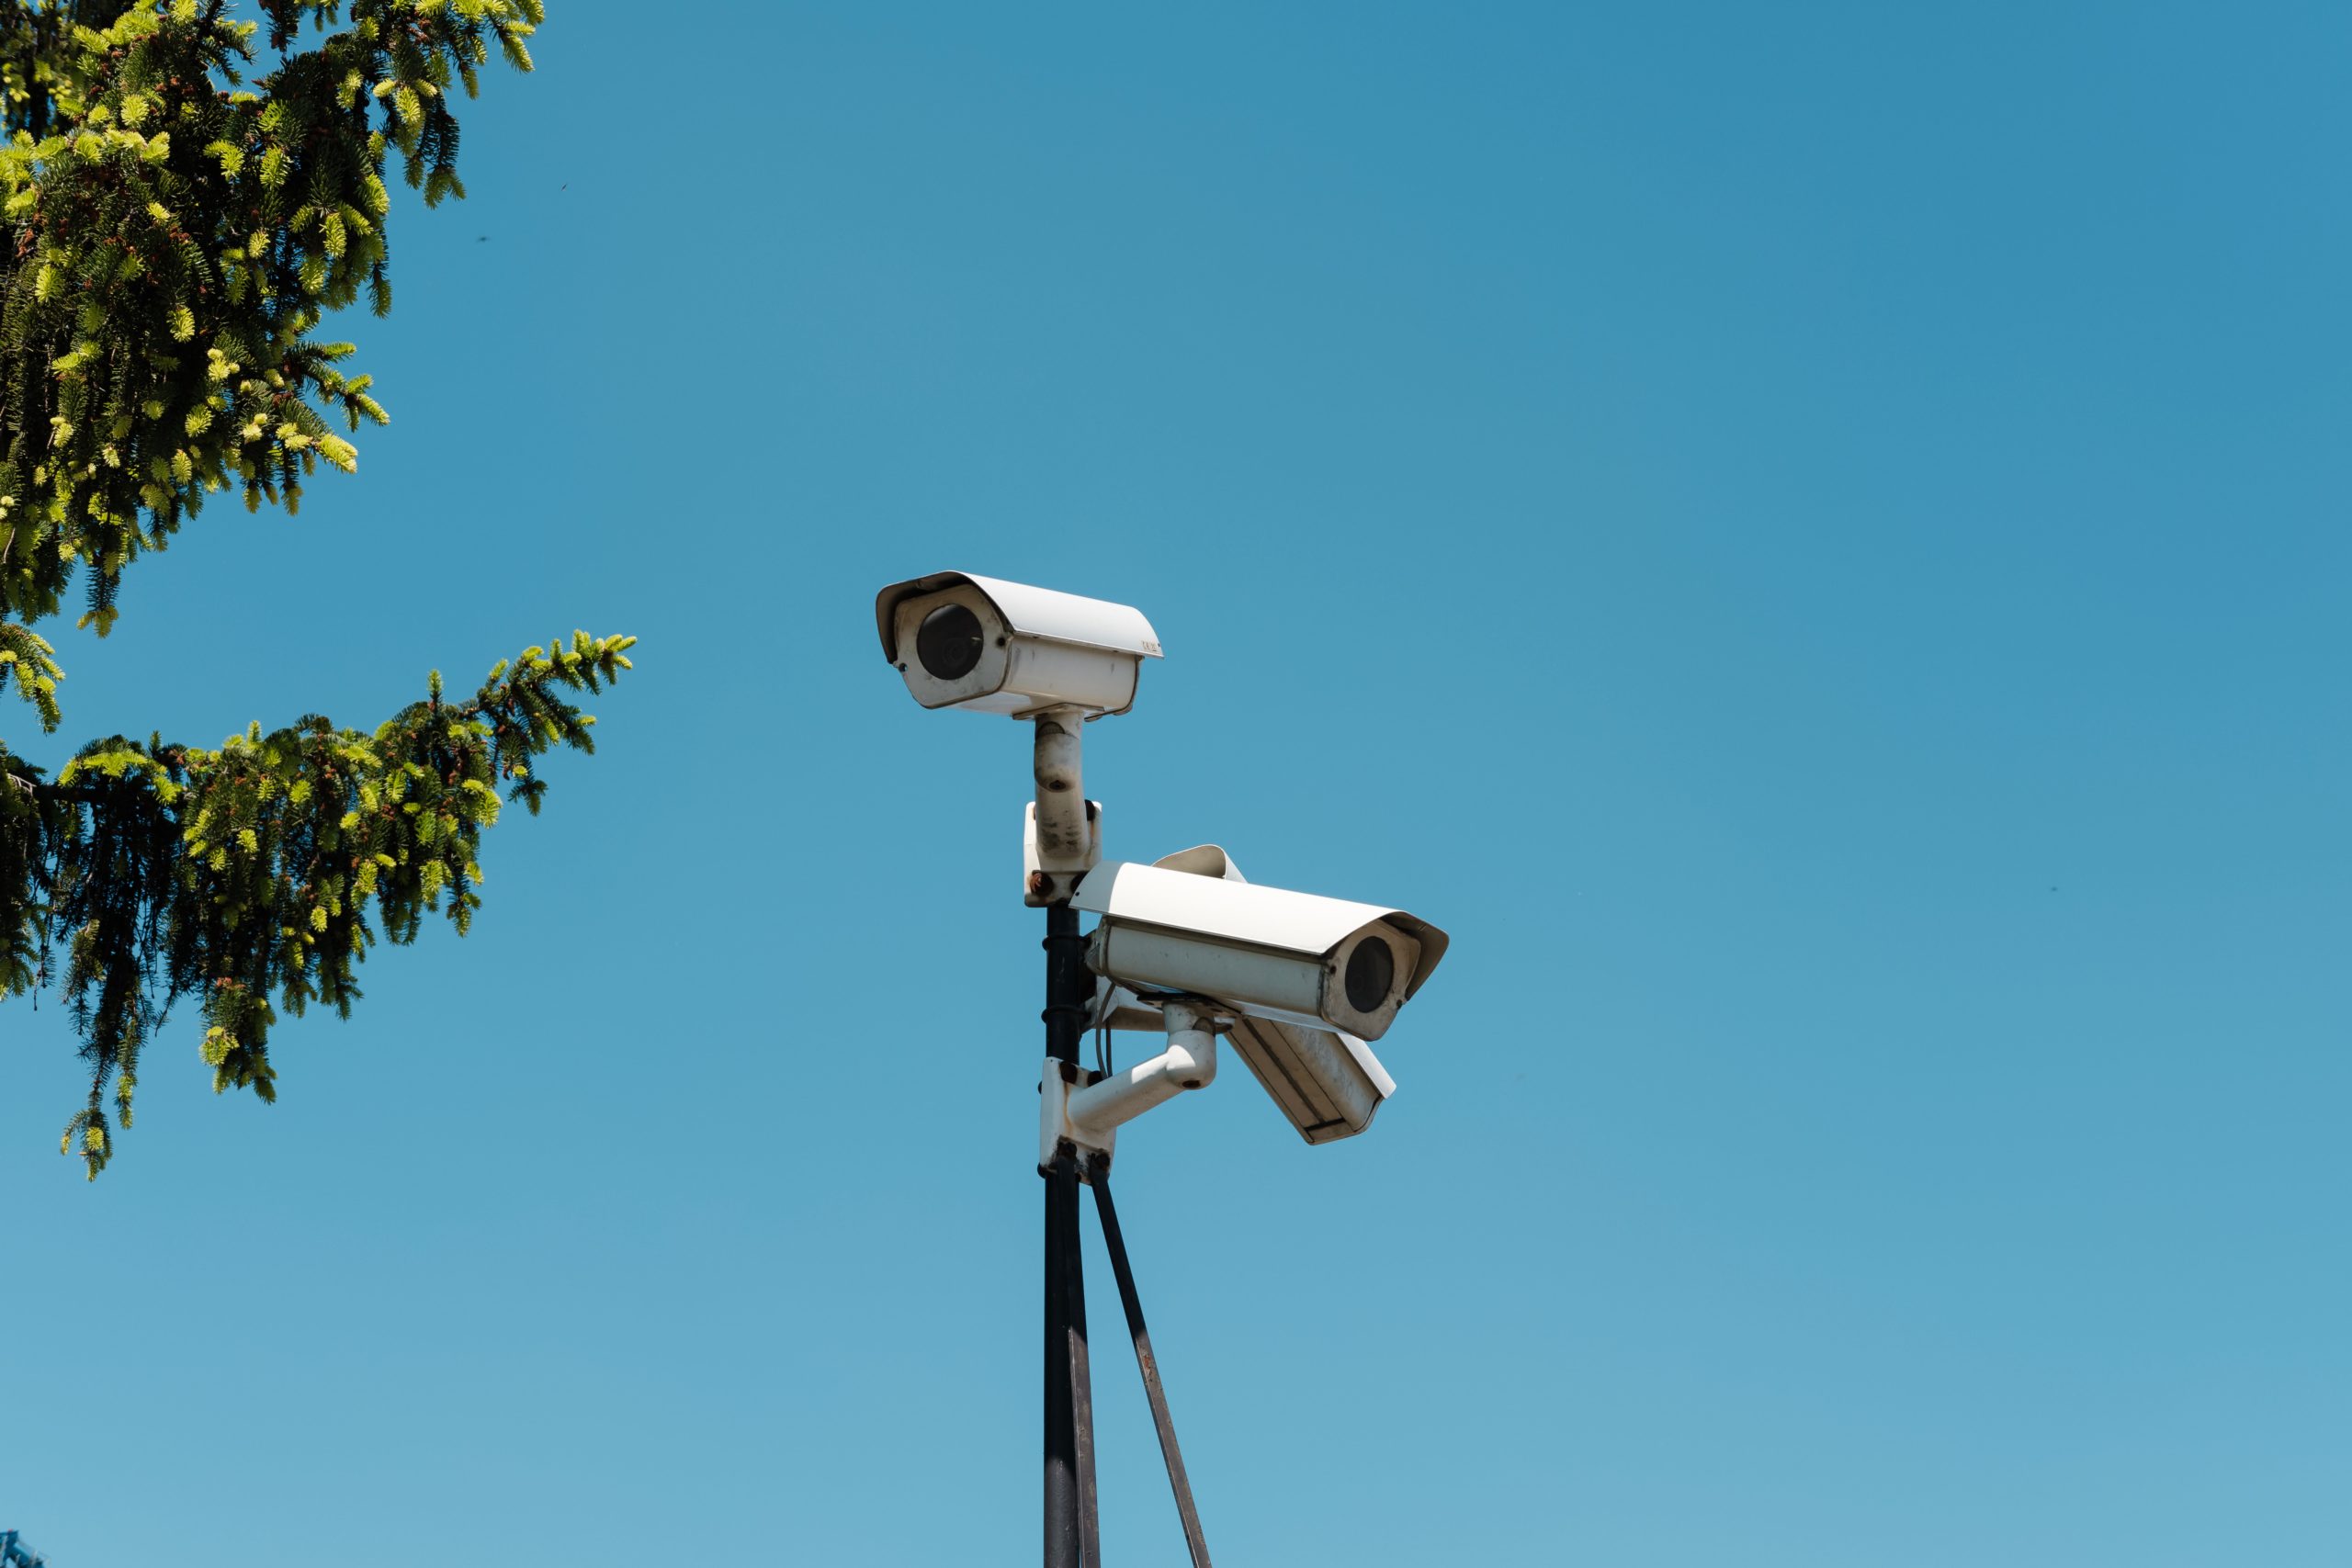 NVR Cameras on pole monitoring environment 